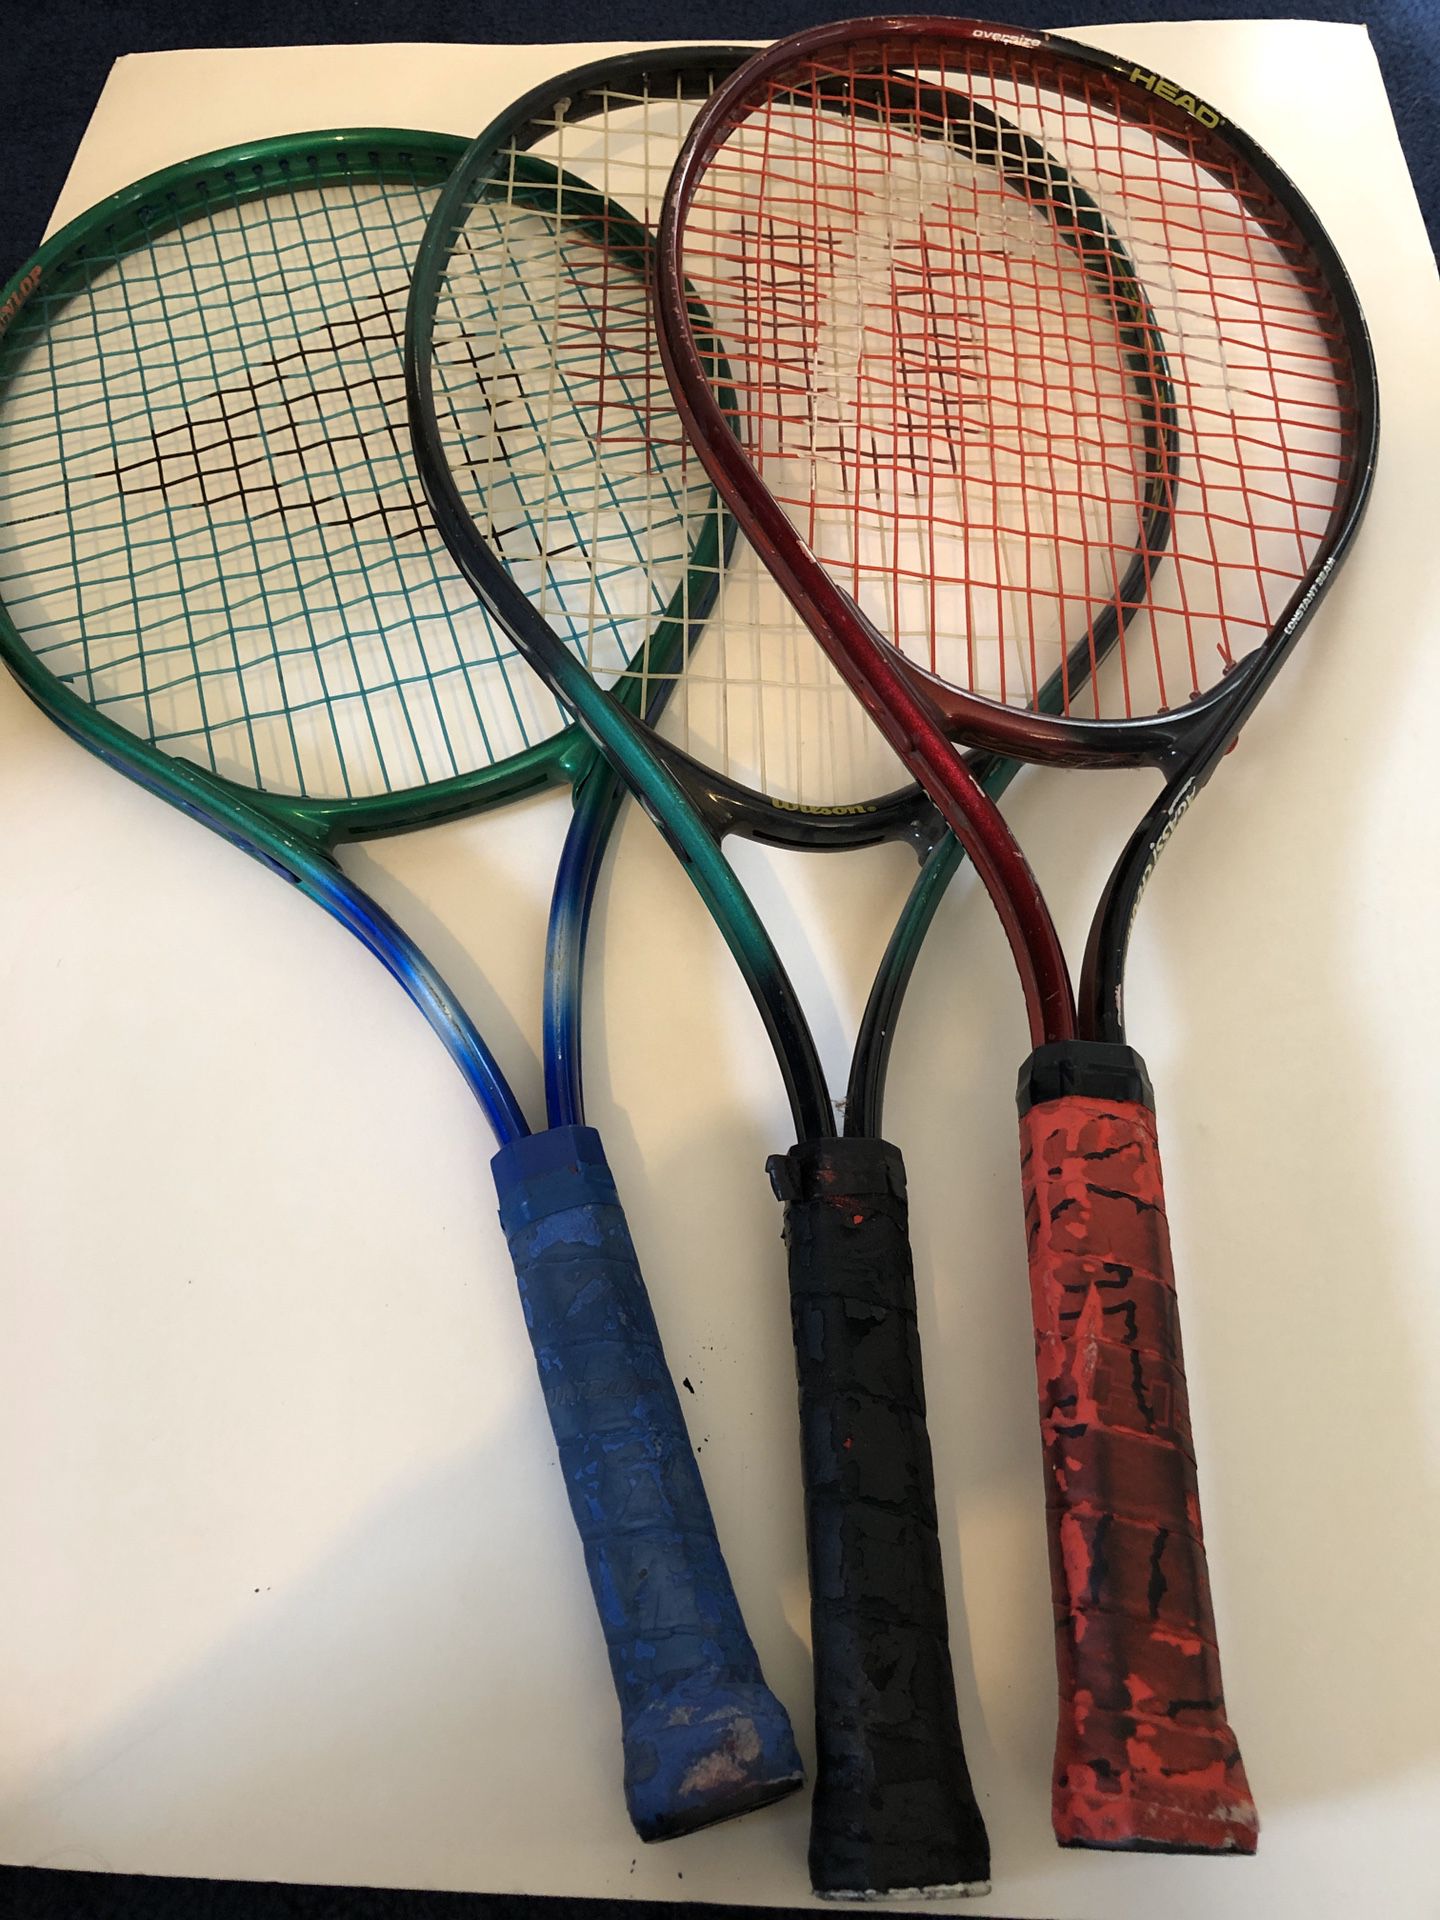 One tennis racket left. Black handle one.